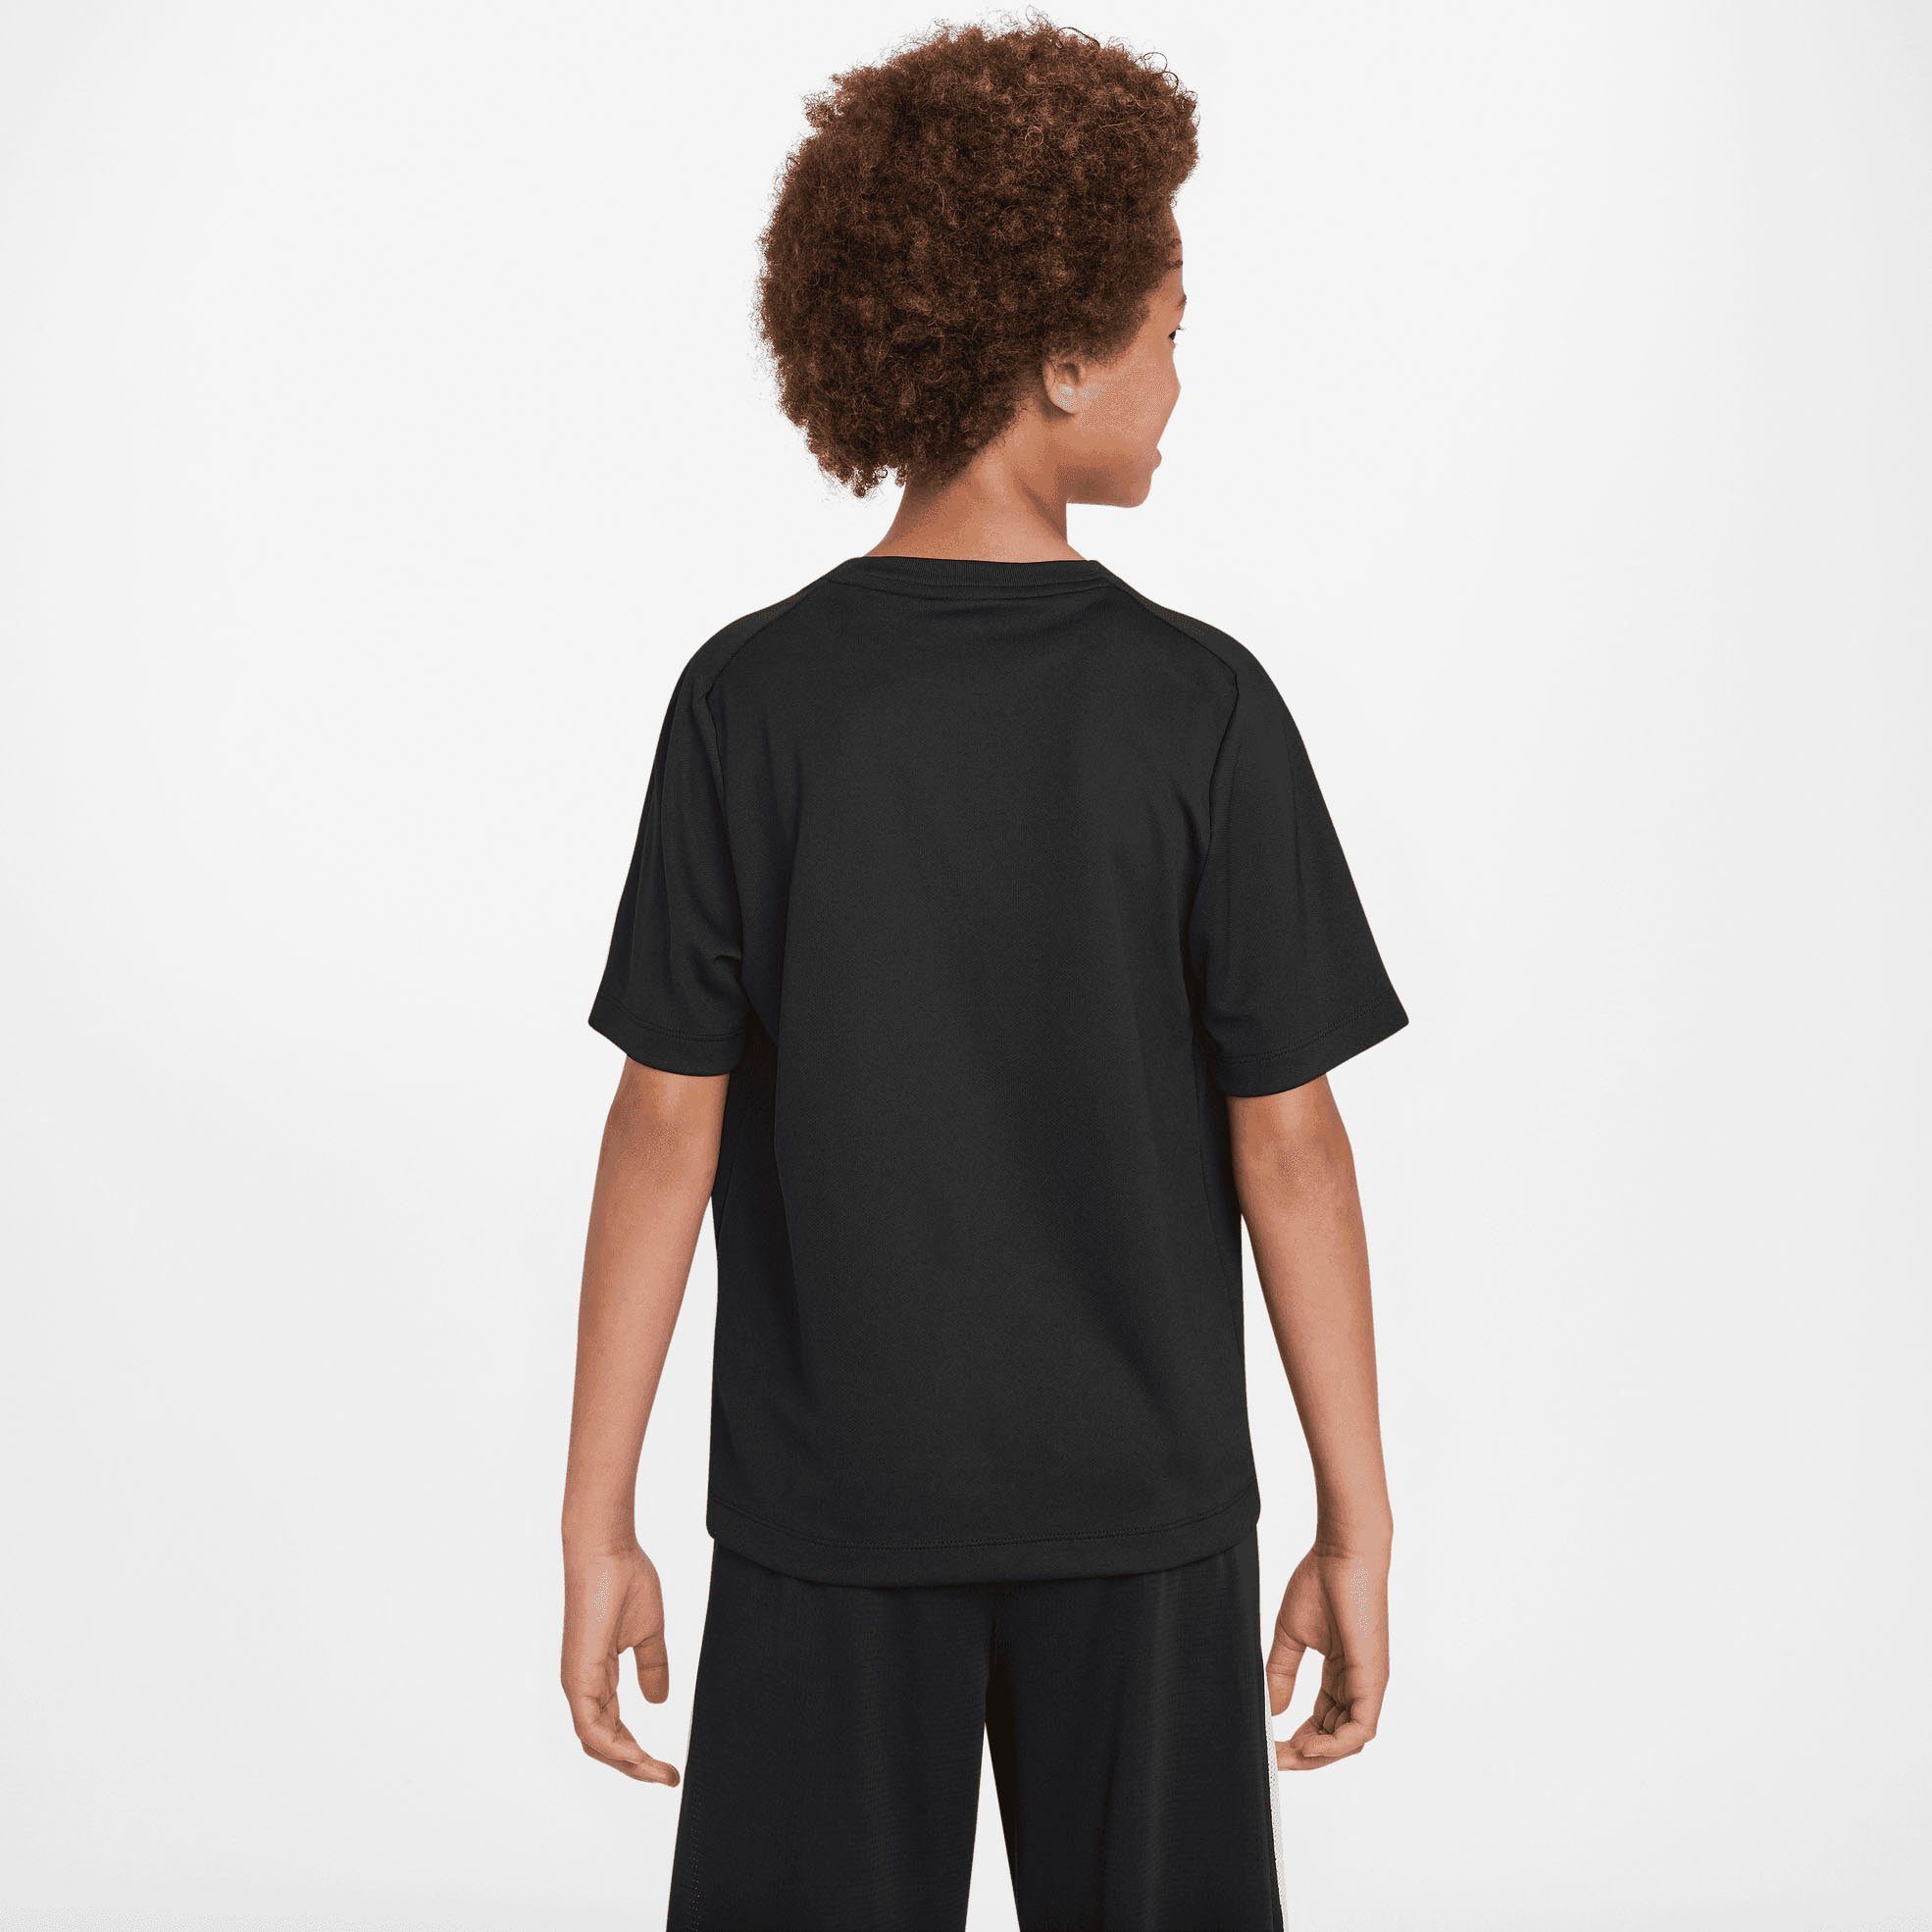 BIG TRAINING GRAPHIC KIDS' (BOYS) MULTI+ TOP DRI-FIT Nike BLACK/WHITE Trainingsshirt